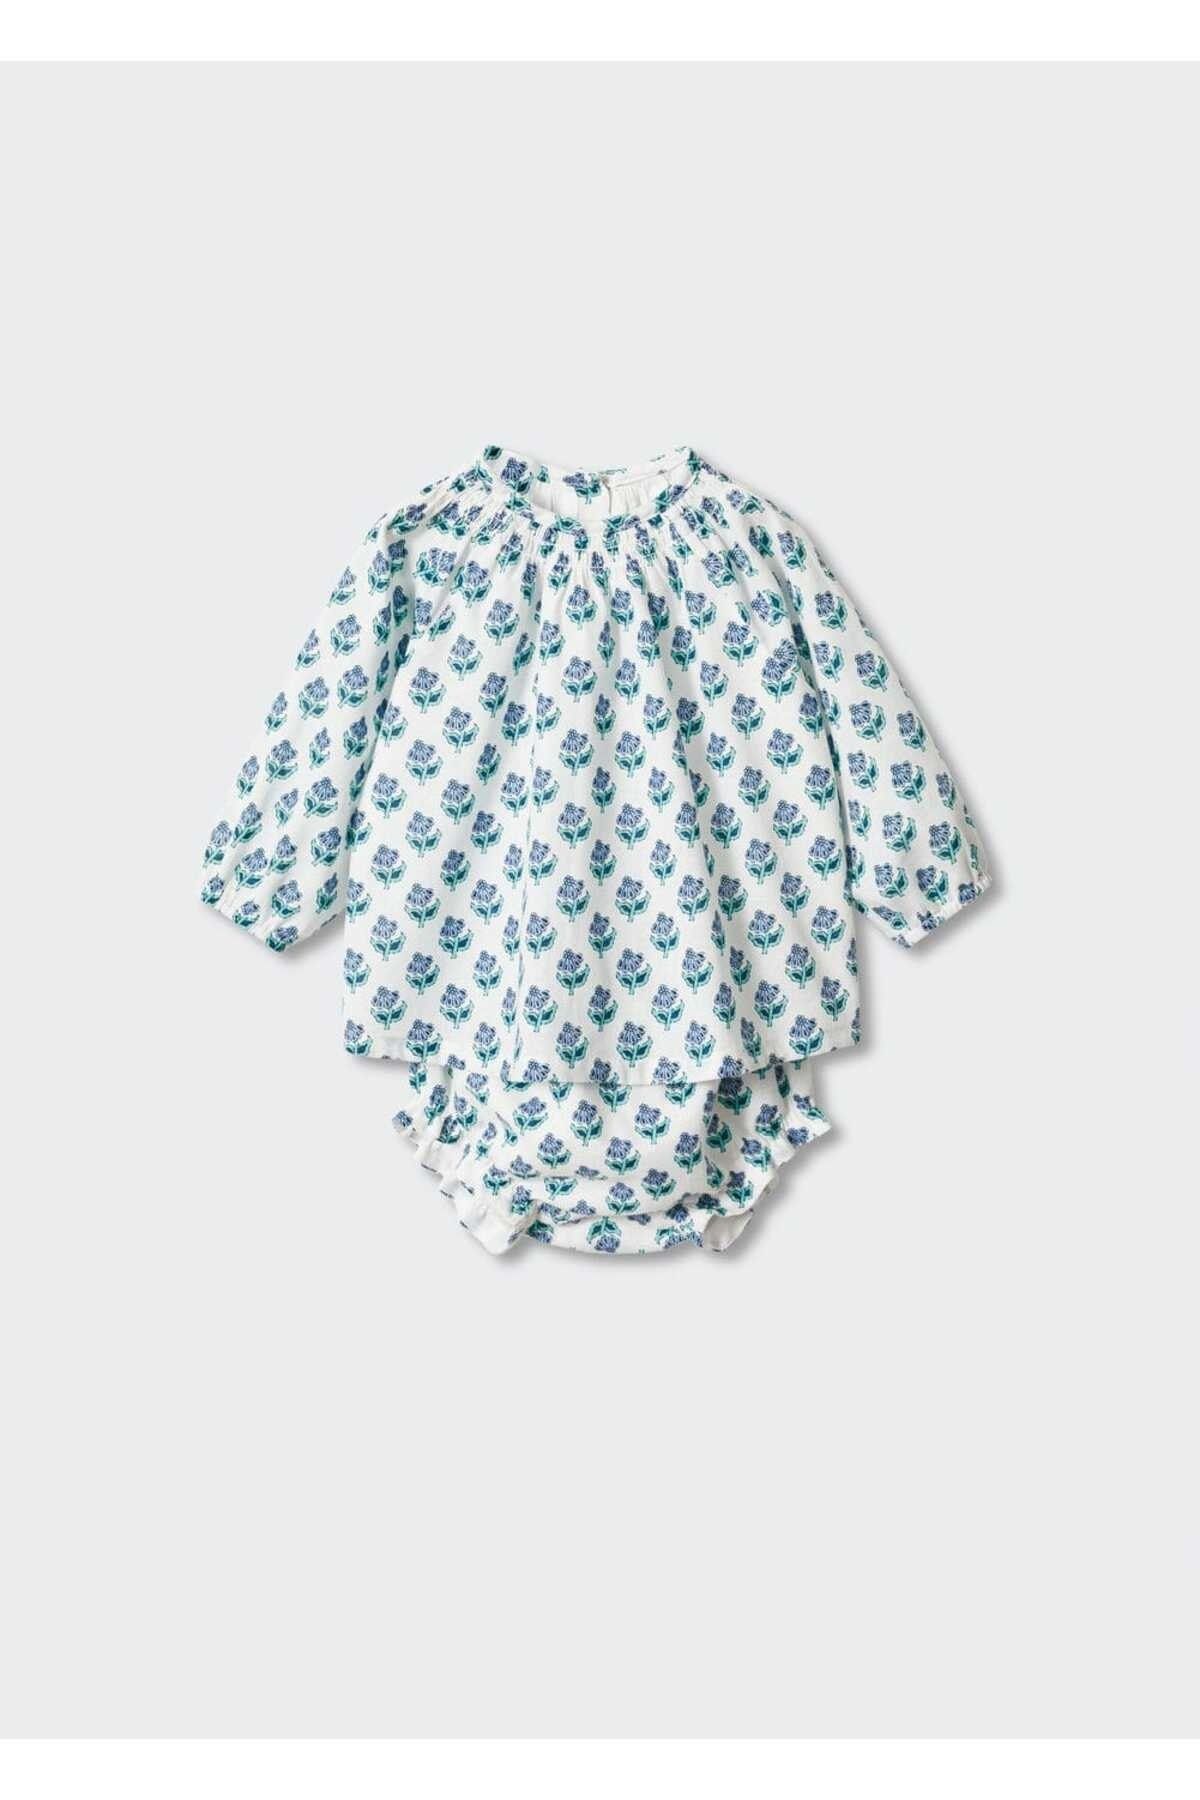 MANGO Baby Pamuklu külotlu elbise